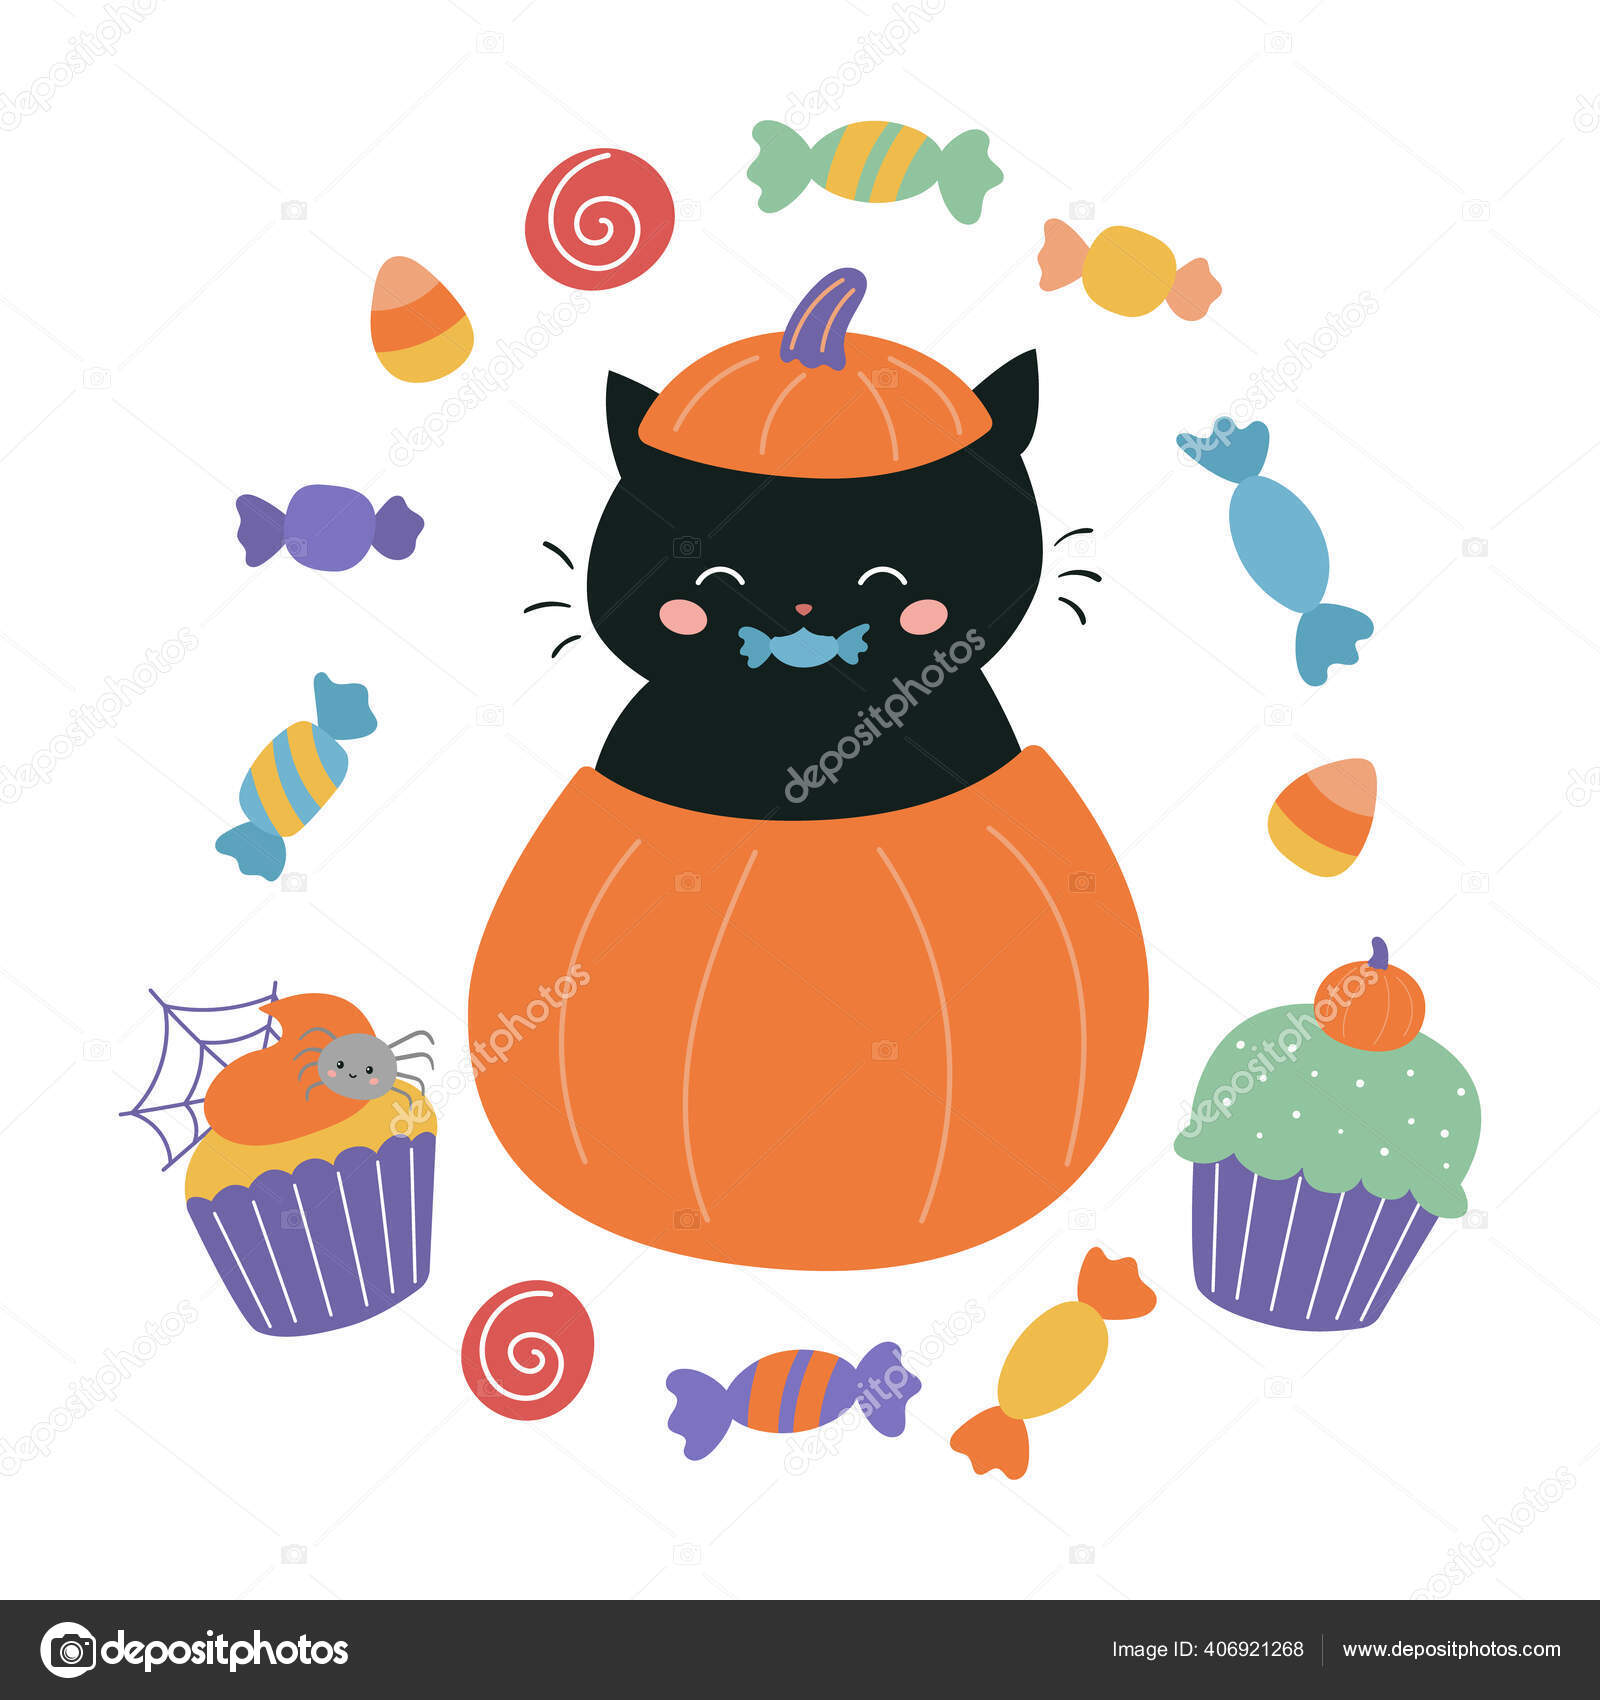 Gato e abóbora de colorir de Halloween imprimível gratuitamente